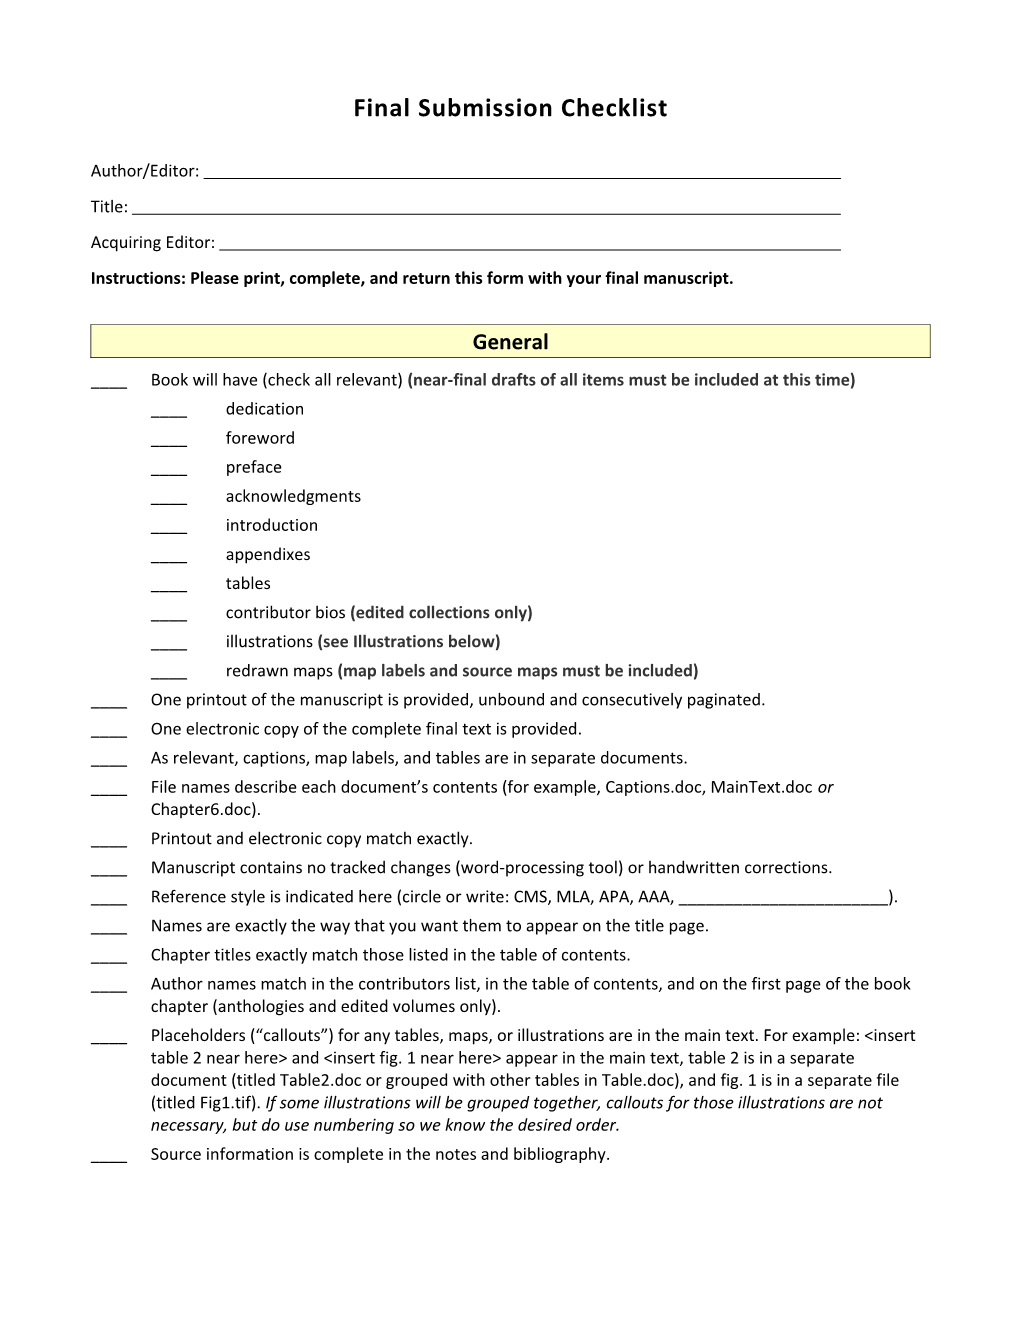 Final Manuscript Submission Checklist